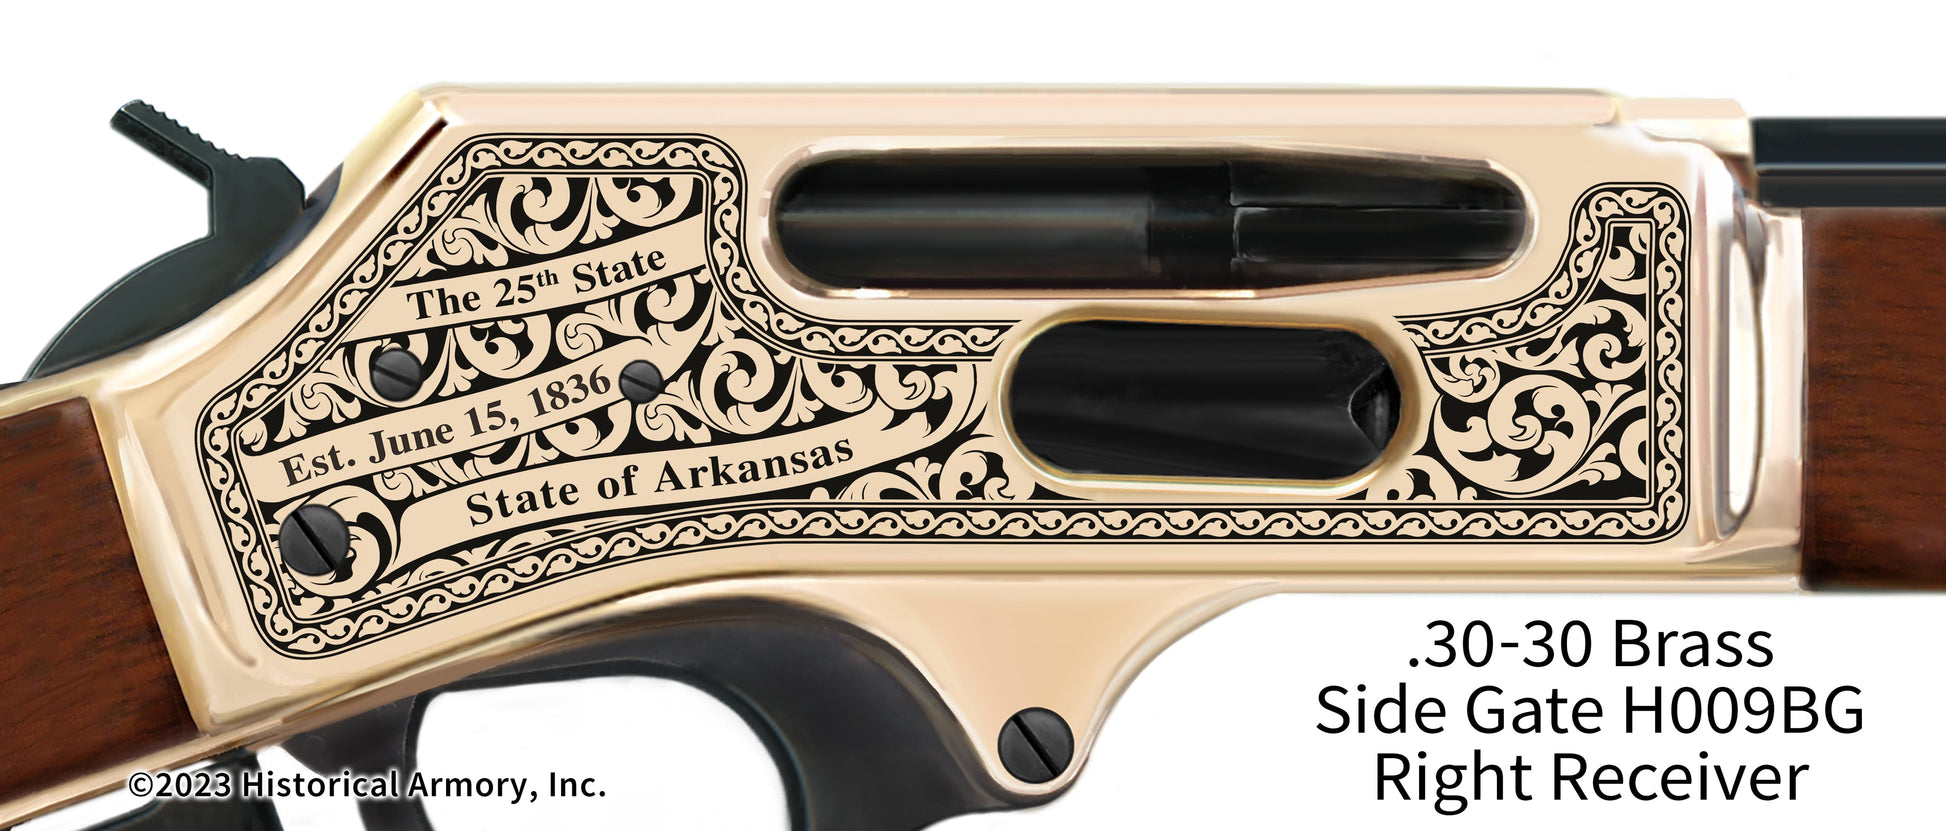 Bradley County Arkansas Engraved Henry .30-30 Brass Side Gate Rifle